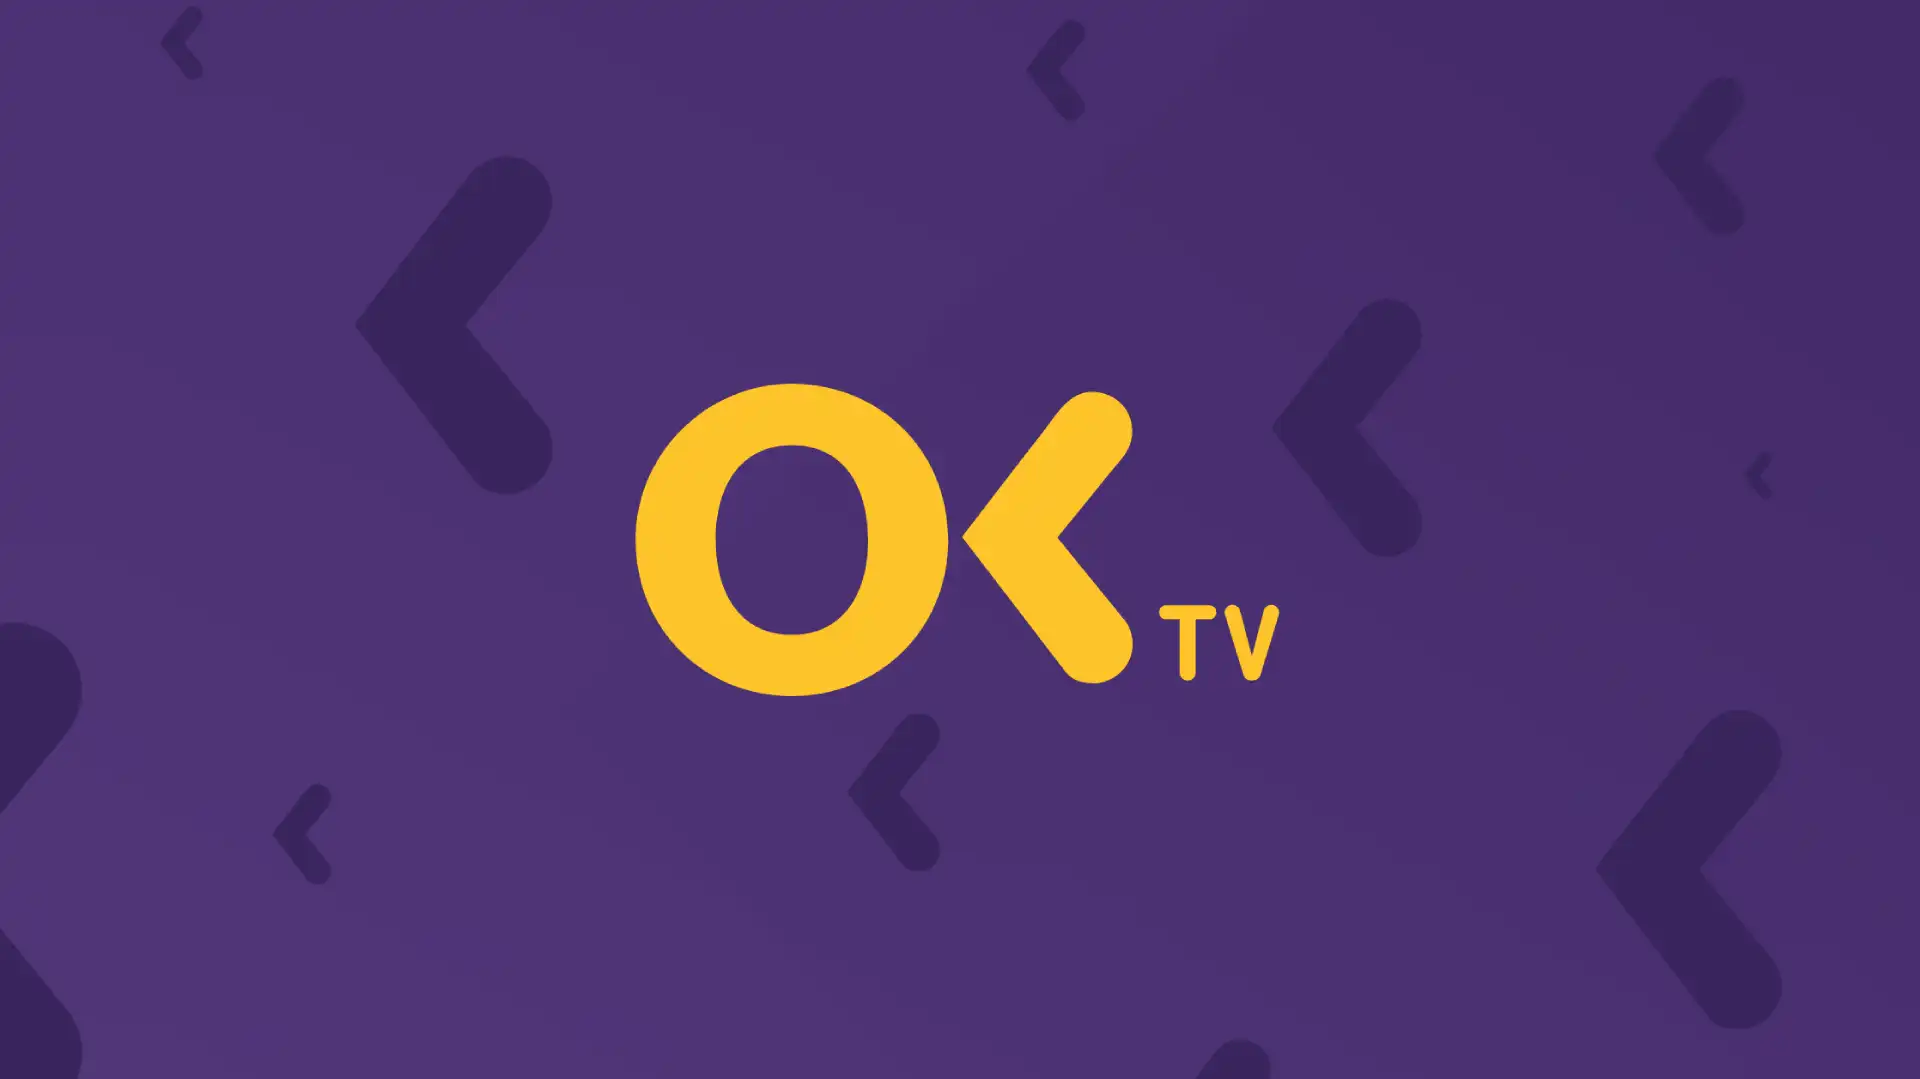 OK TV logo